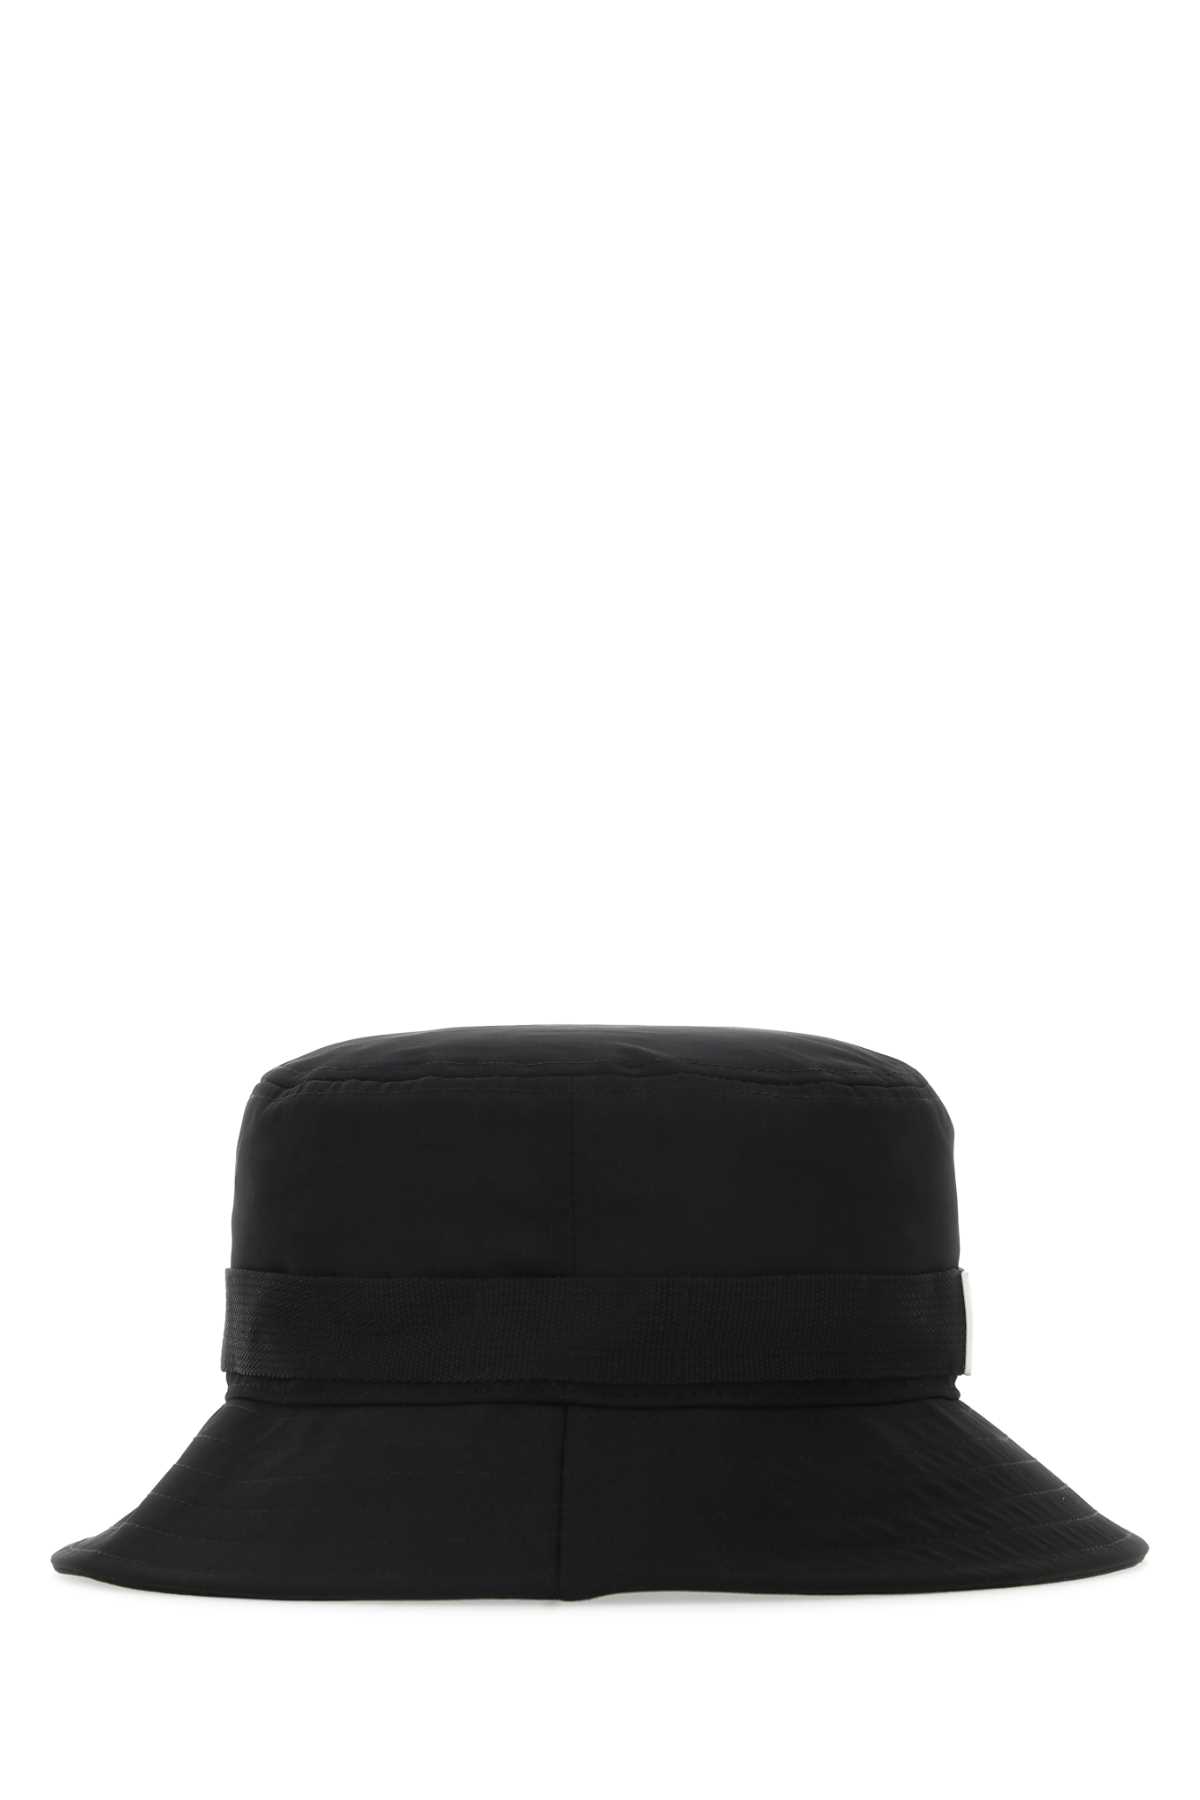 Kenzo Black Polyester Blend Jungle Hat In 99j